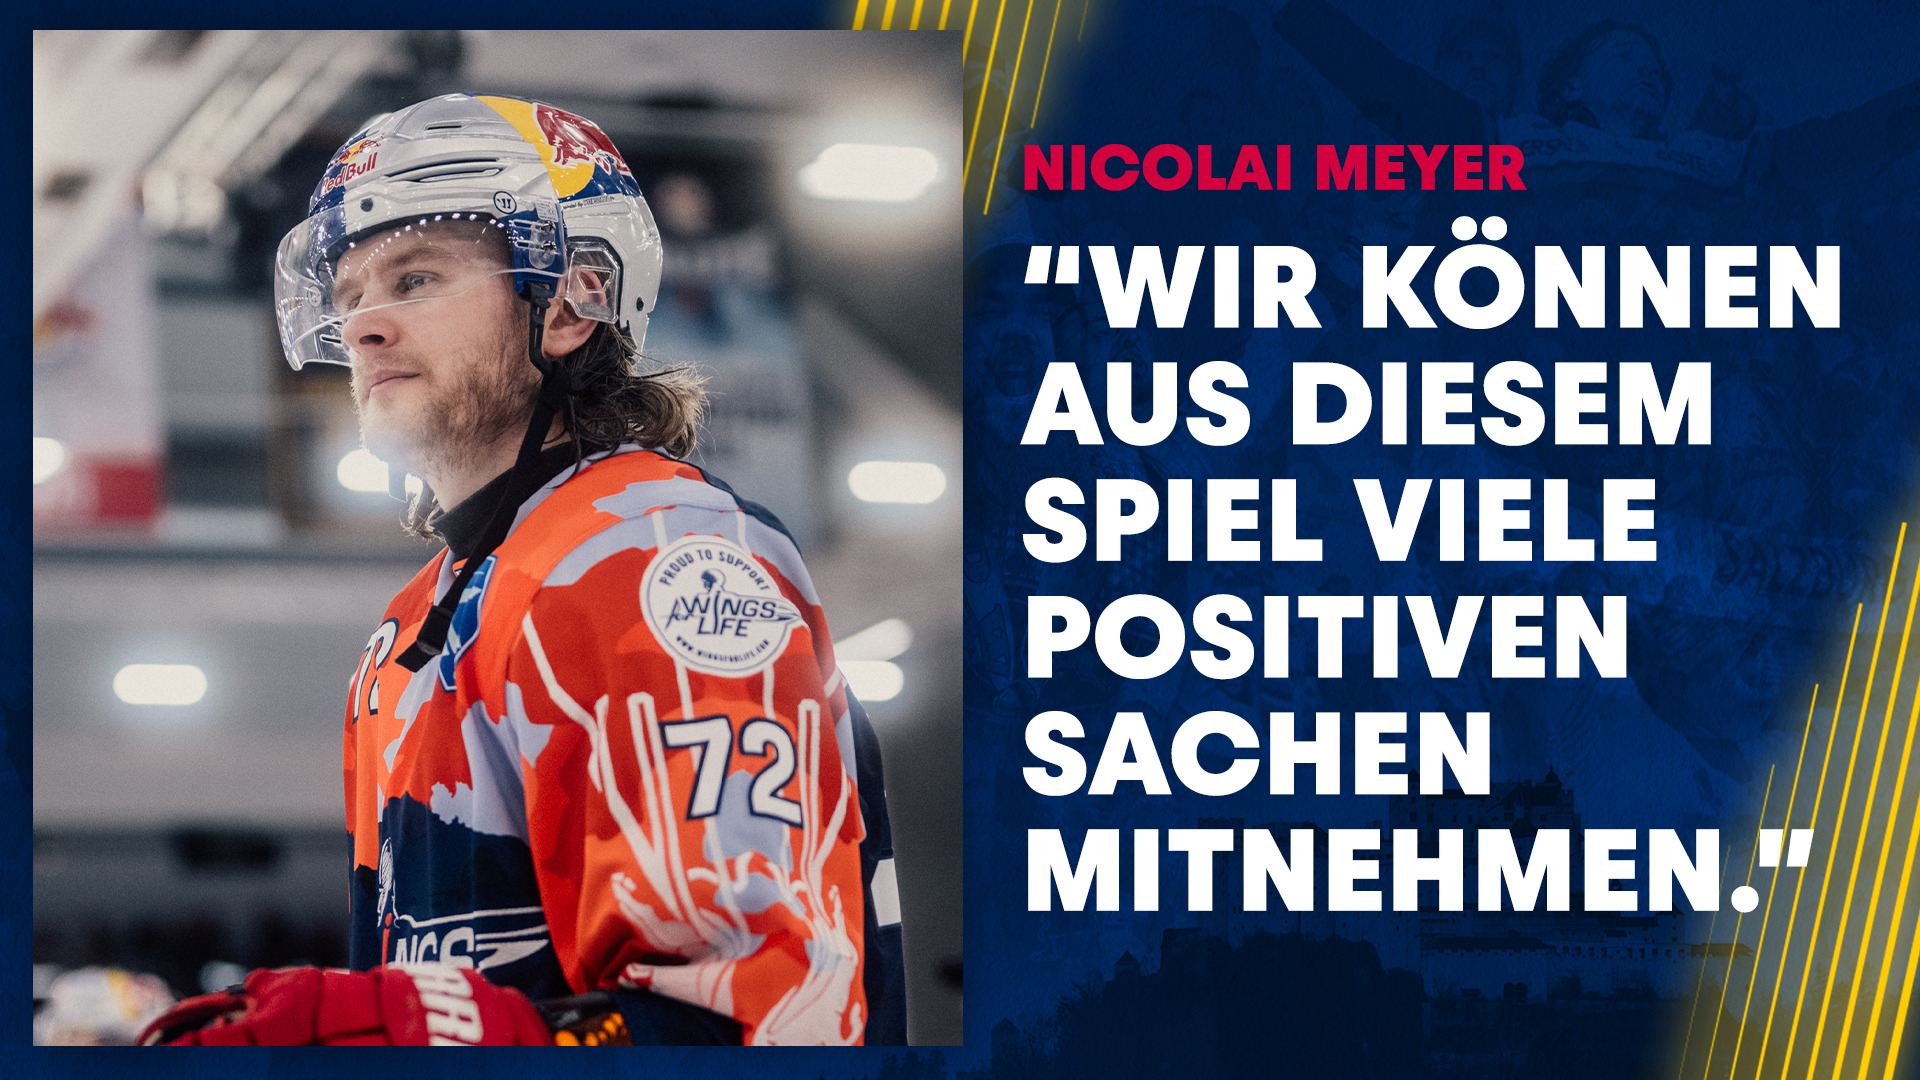 Statement: Nicolai Meyer